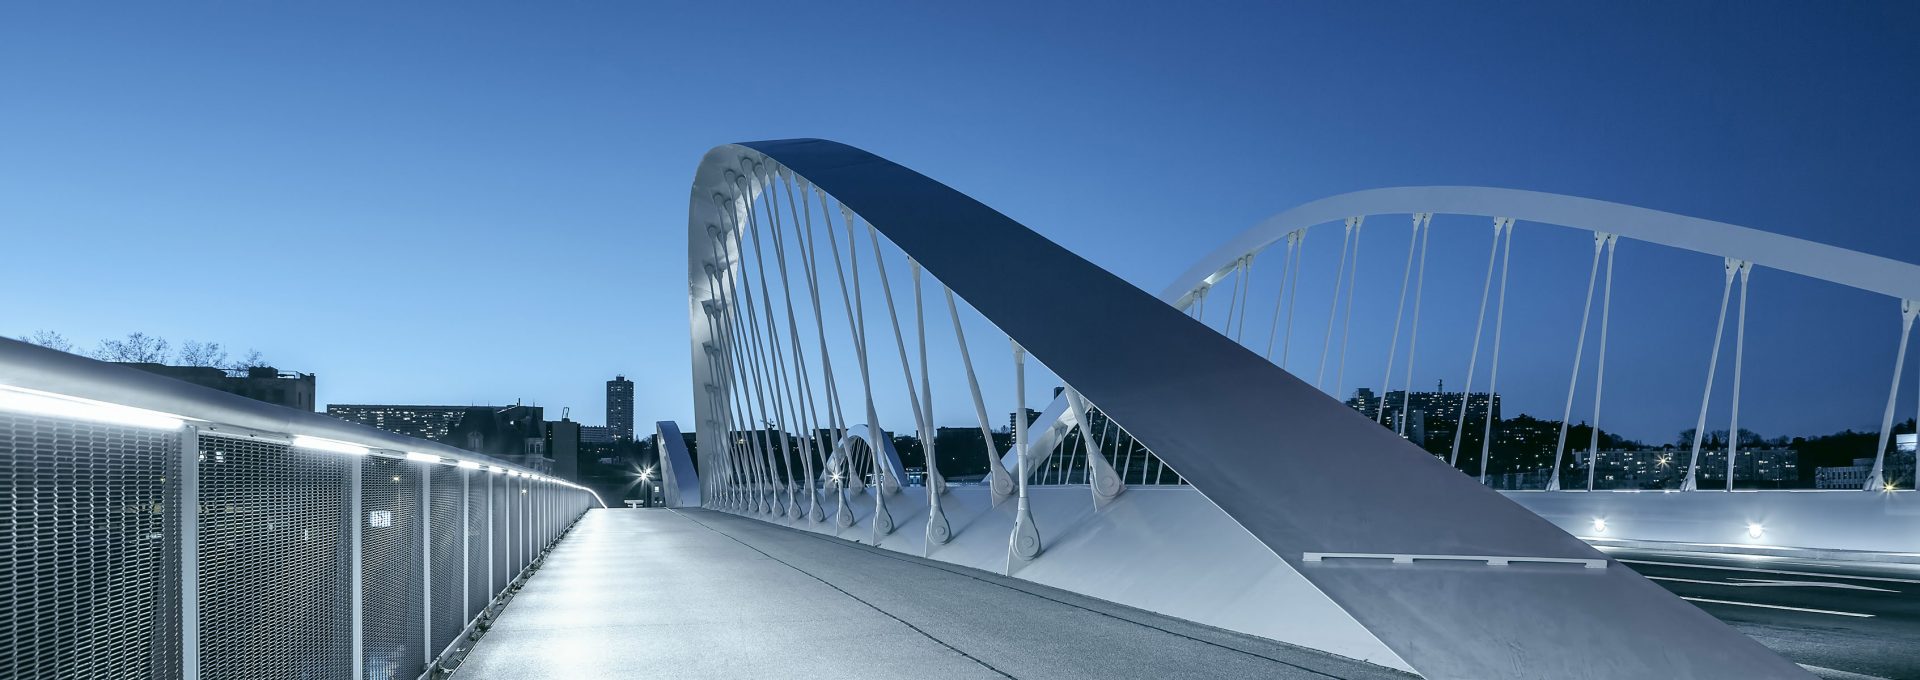 Noack Engineering | Bridge construction